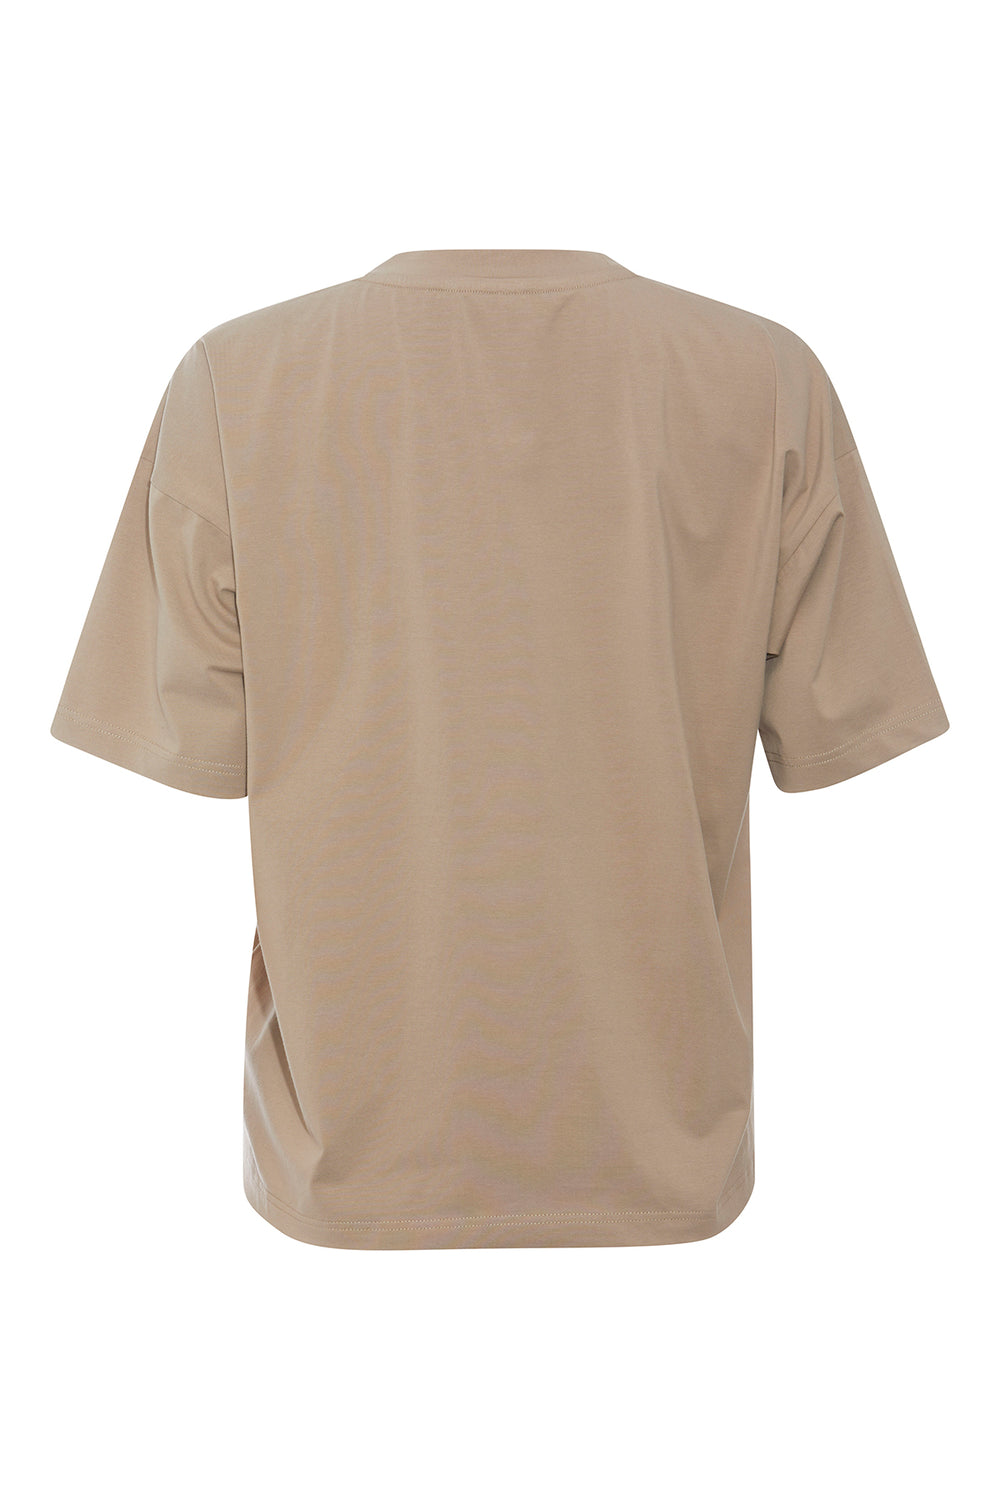 PBO Bravo T-shirt T-SHIRTS 408 Elm